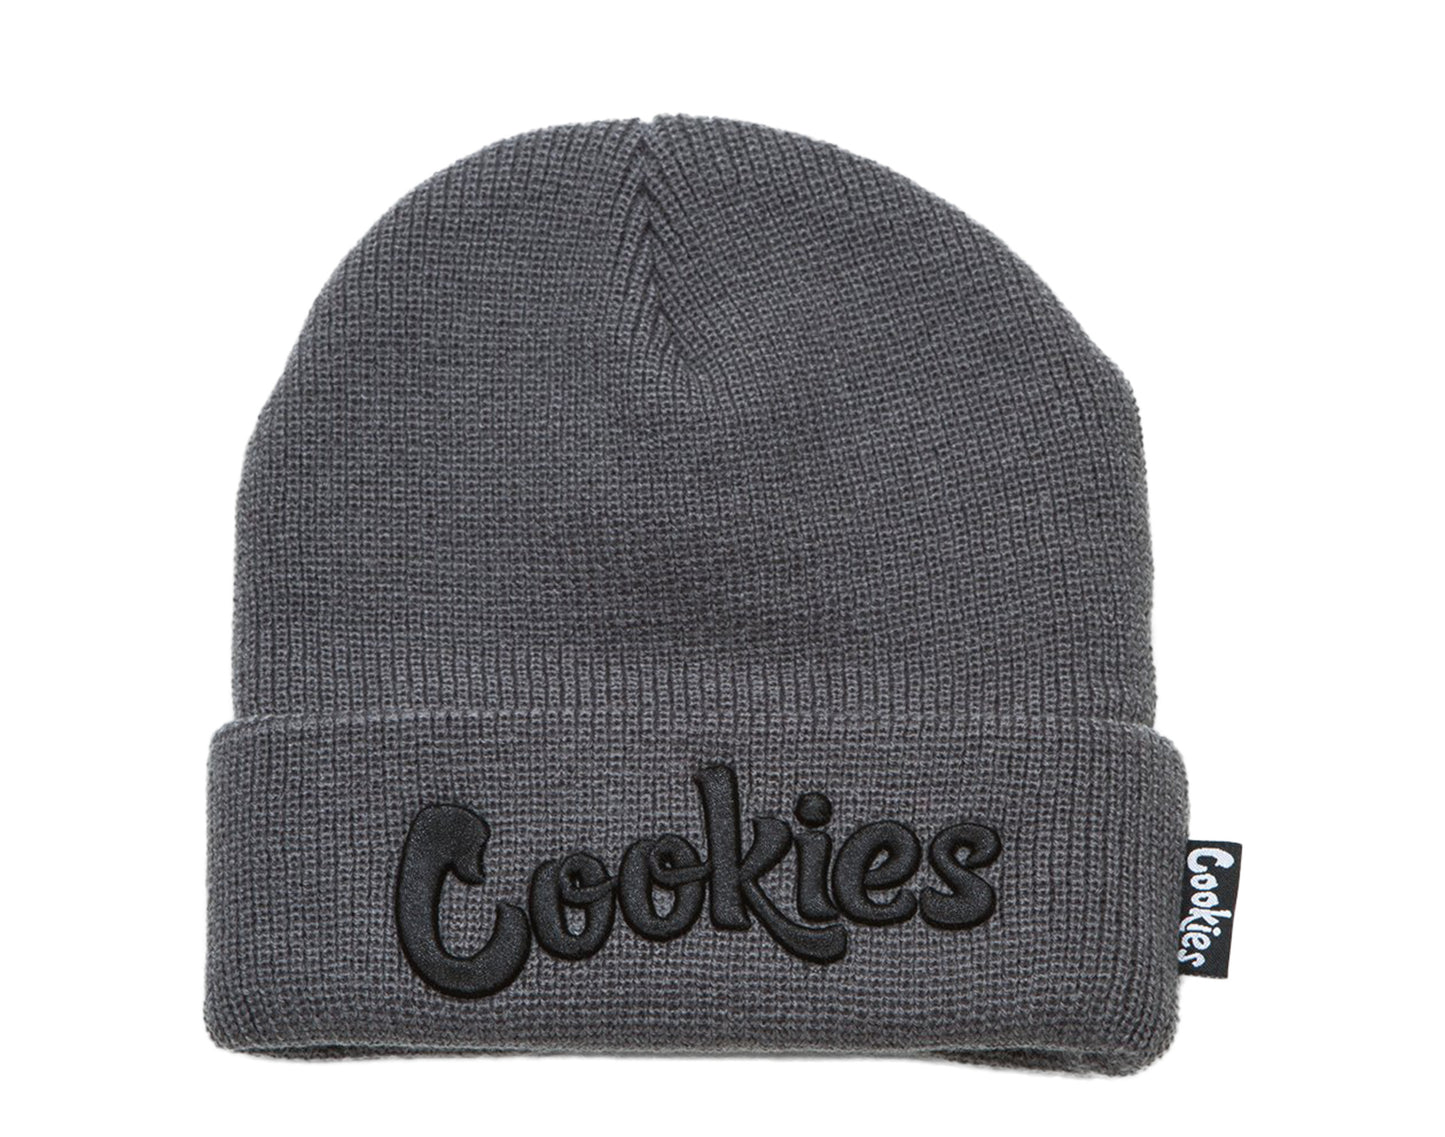 Cookies Original Logo Thin Mint Knit Beanie Grey/Black Hat 1540X3739-HCB